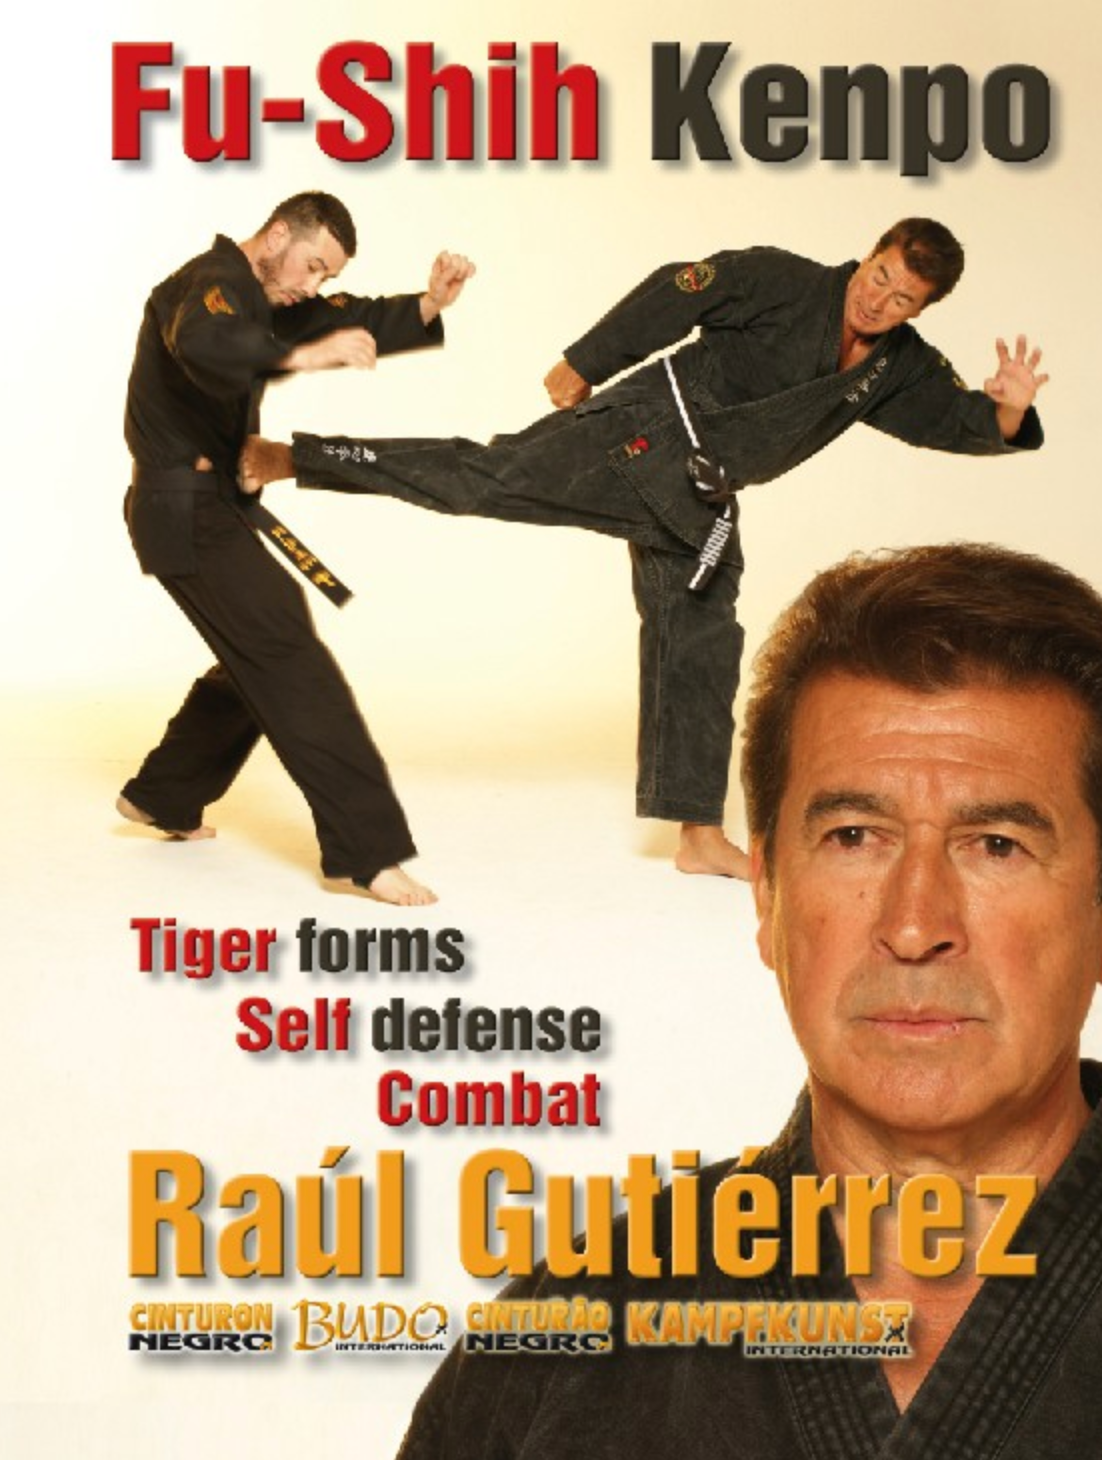 Fu Shih Kenpo Vol 2 Tiger Forms & Self Defense DVD by Raul Gutierrez - Budovideos Inc